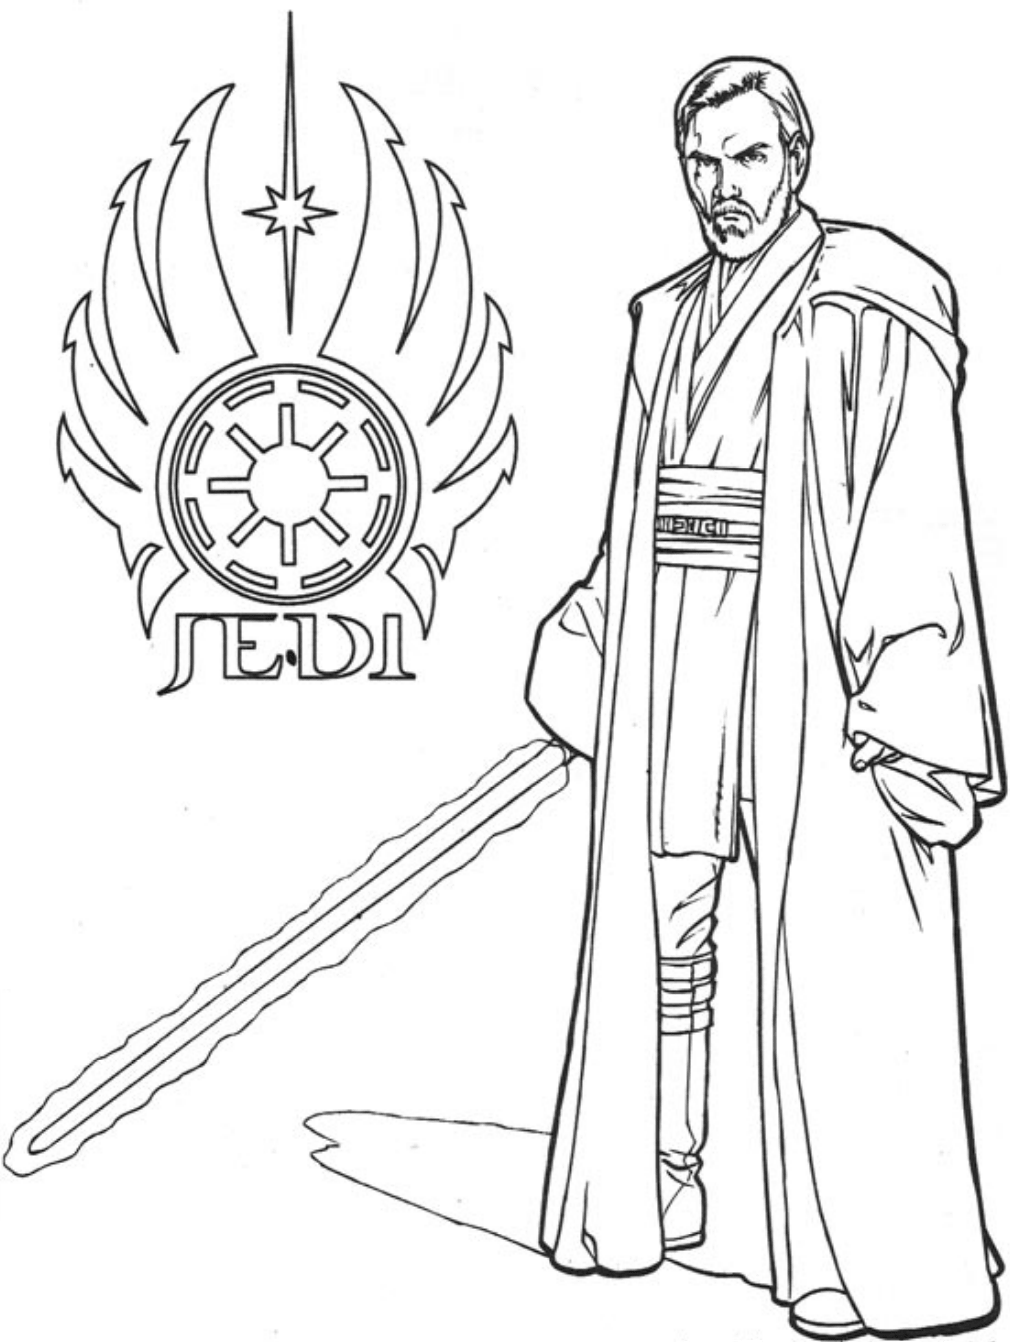 Download Obi Wan Kenobi Coloring Page - Free Printable Coloring Pages for Kids